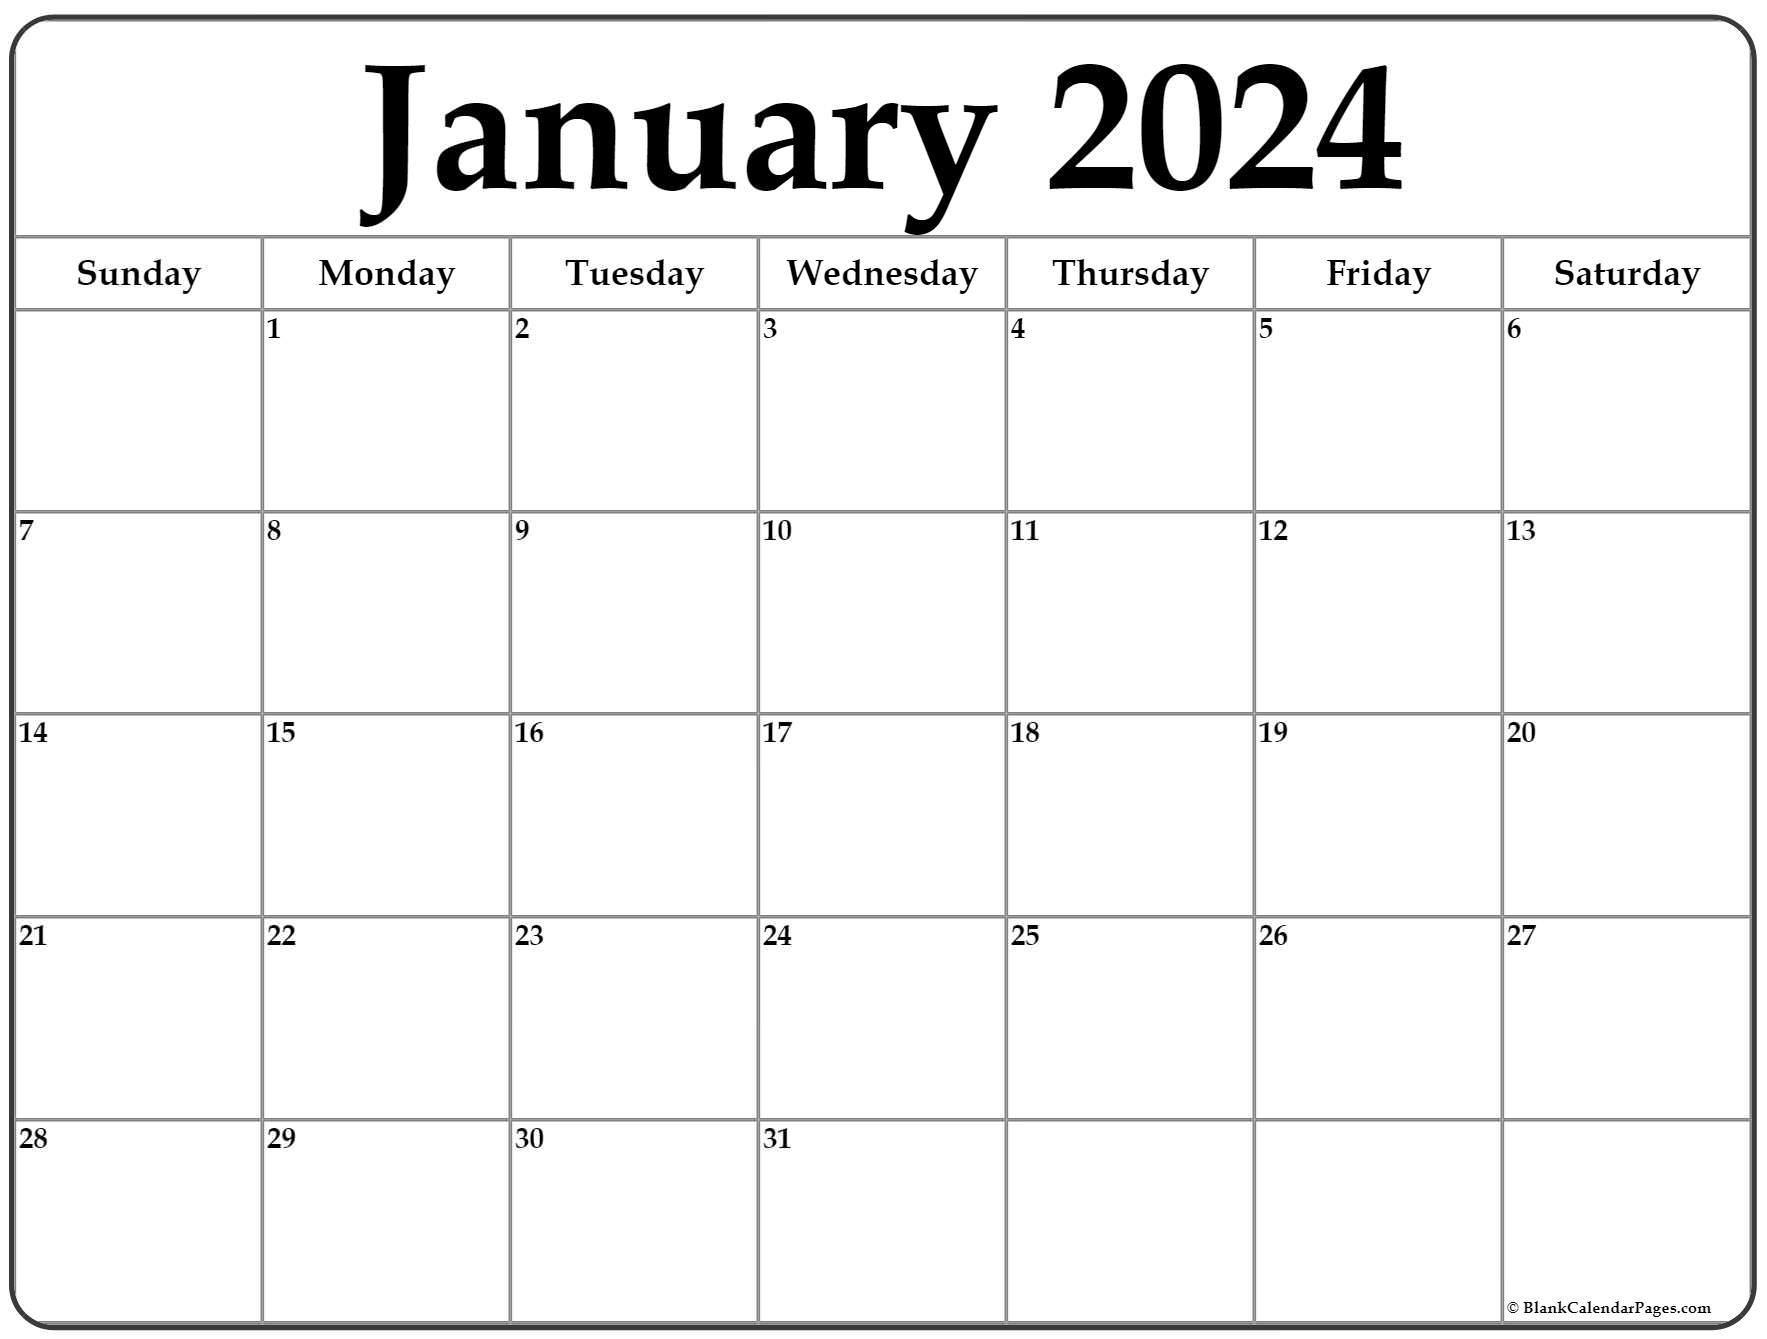 January 2024 Calendar | Free Printable Calendar | Printable Calendar 2024 Monthly